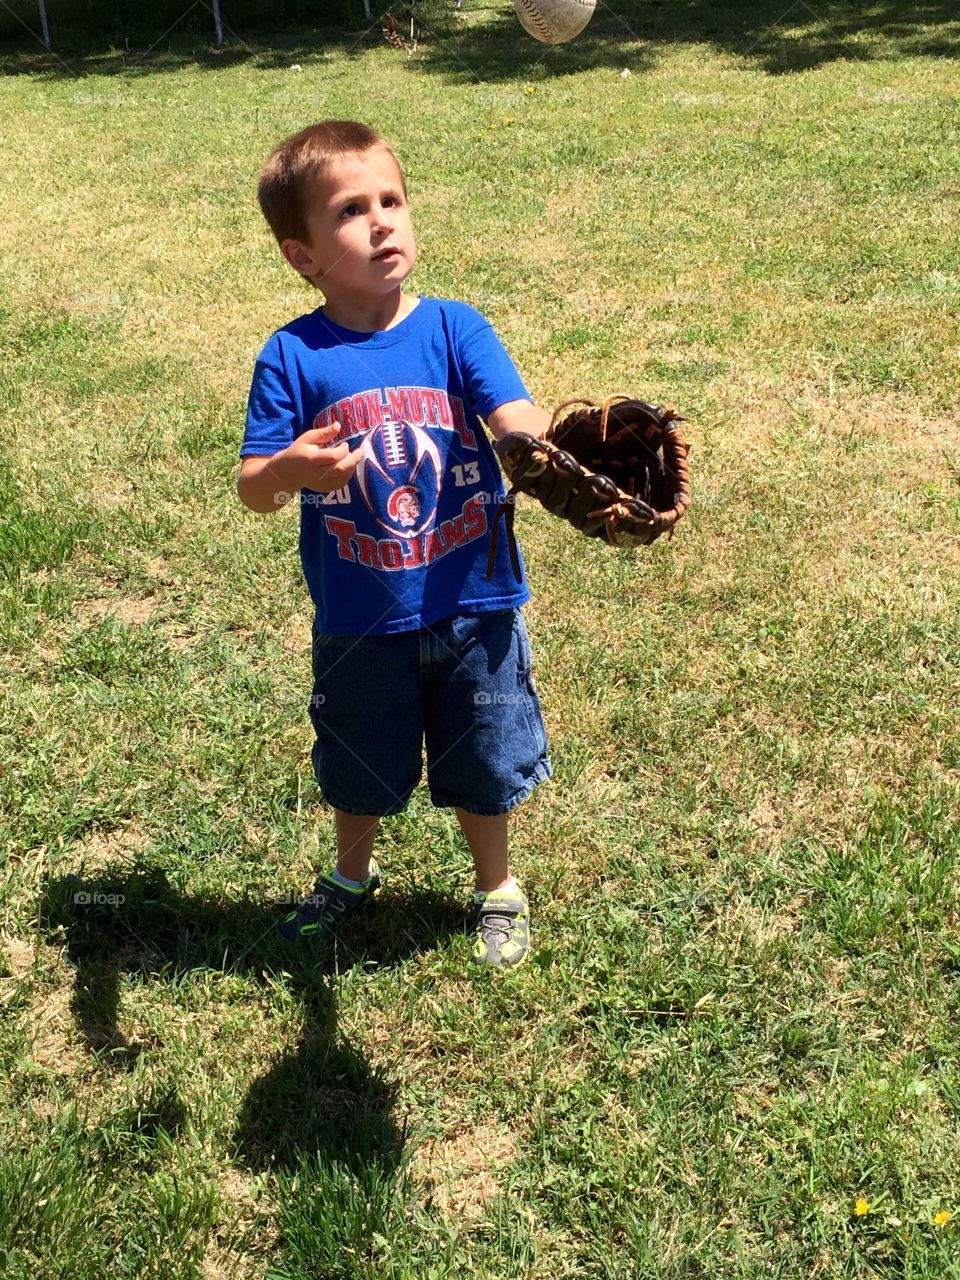 Practicing baseball